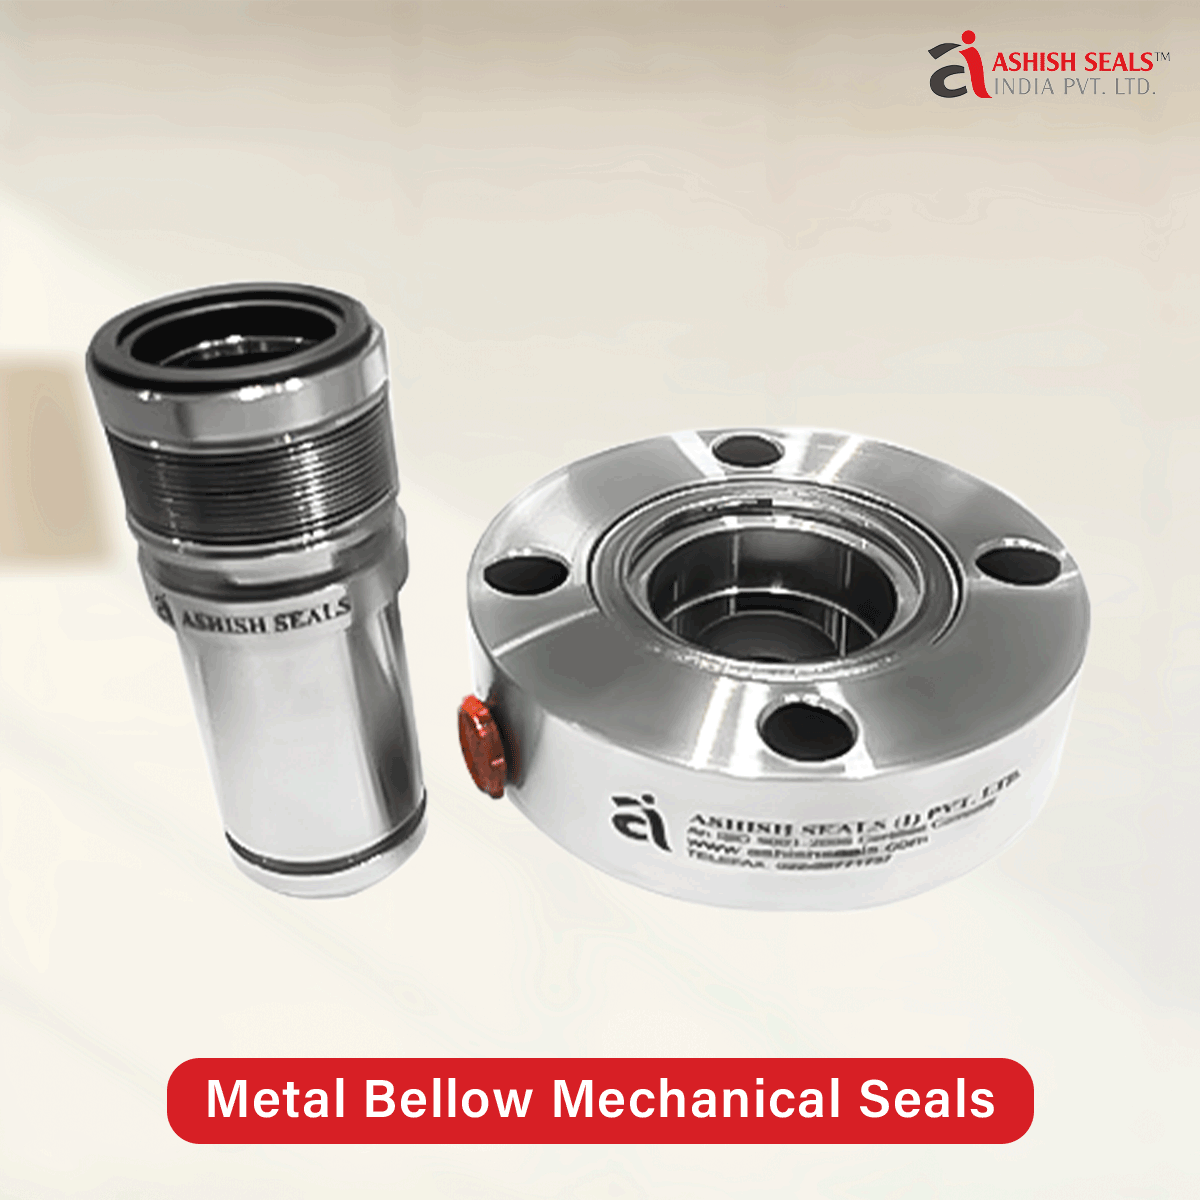 Metal Bellow Mechanical Seals manufacturer, supplier and exporter in Mumbai, India